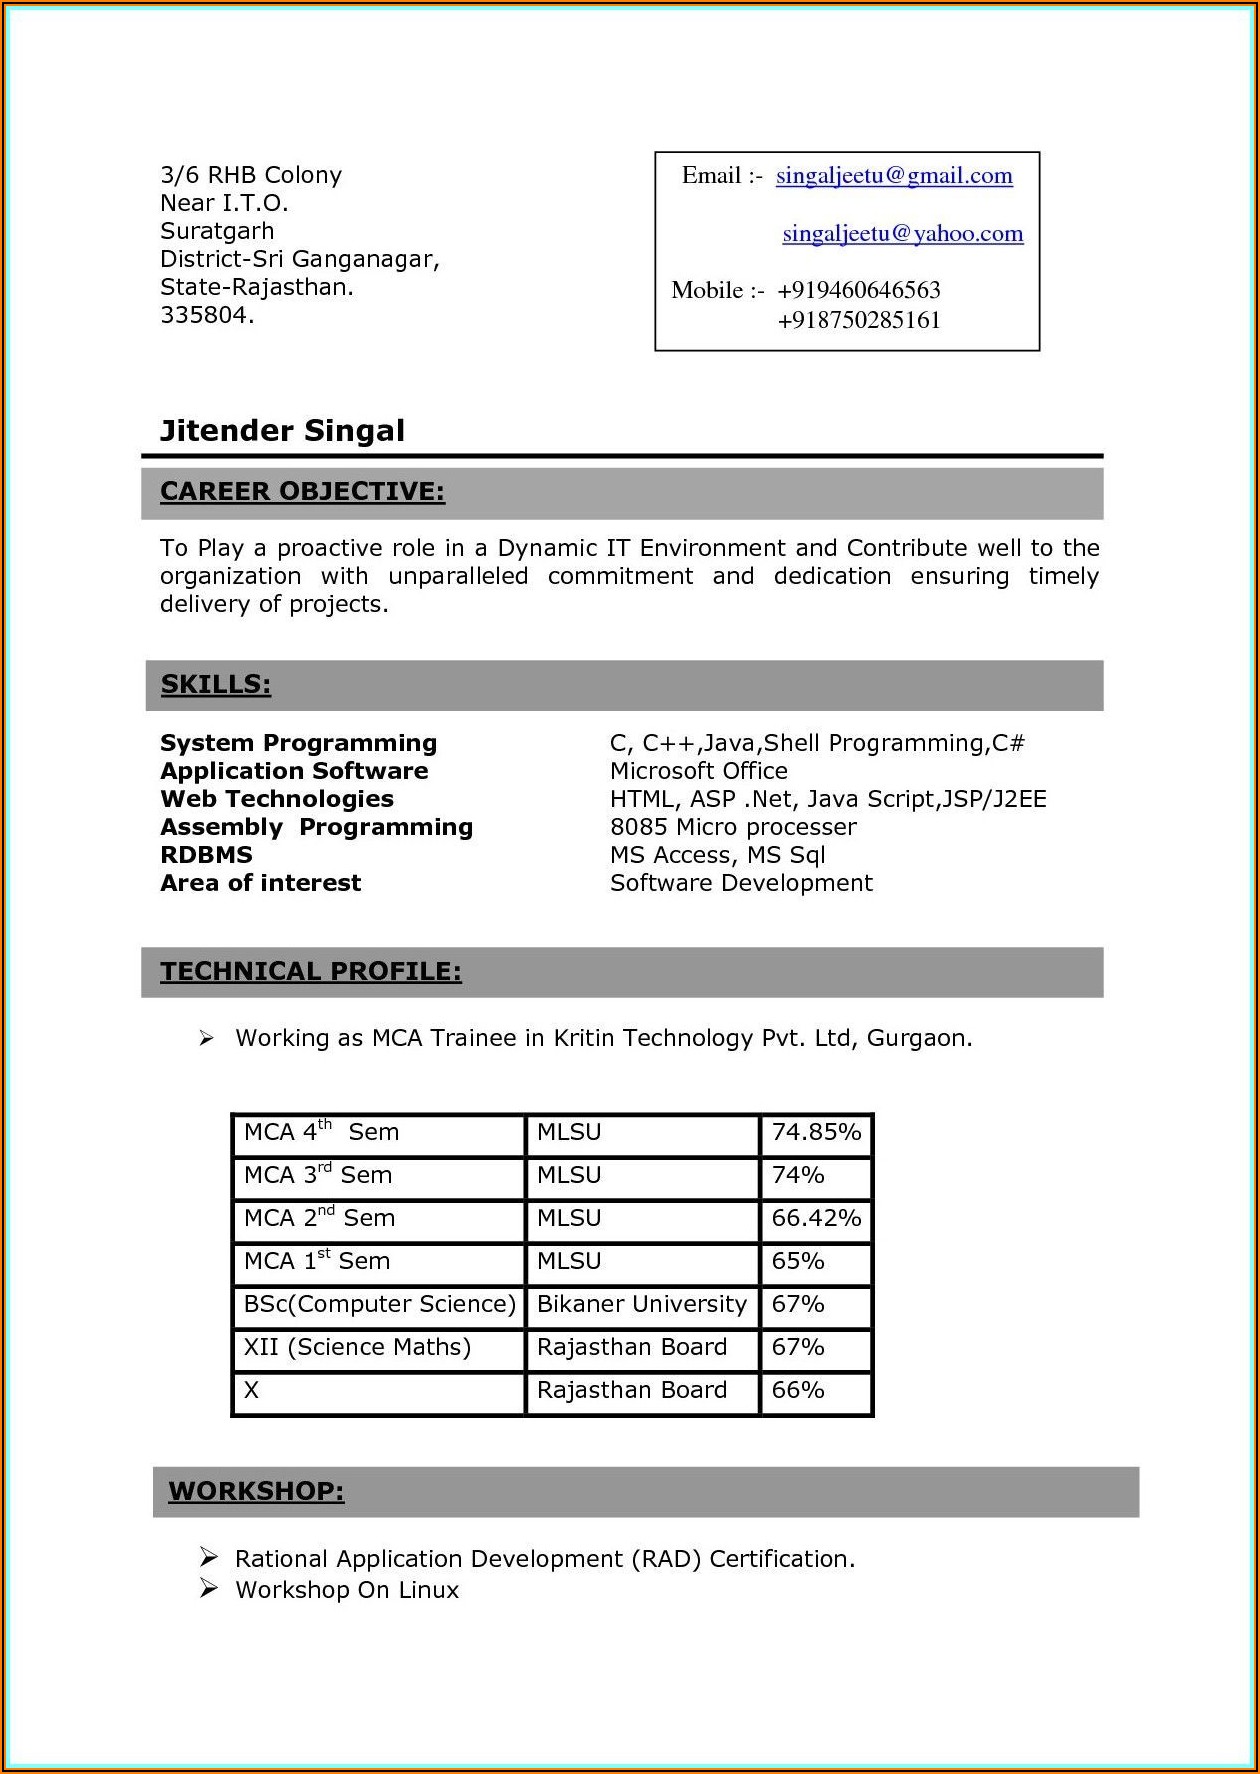 Resume Format For Gnm Nursing Student